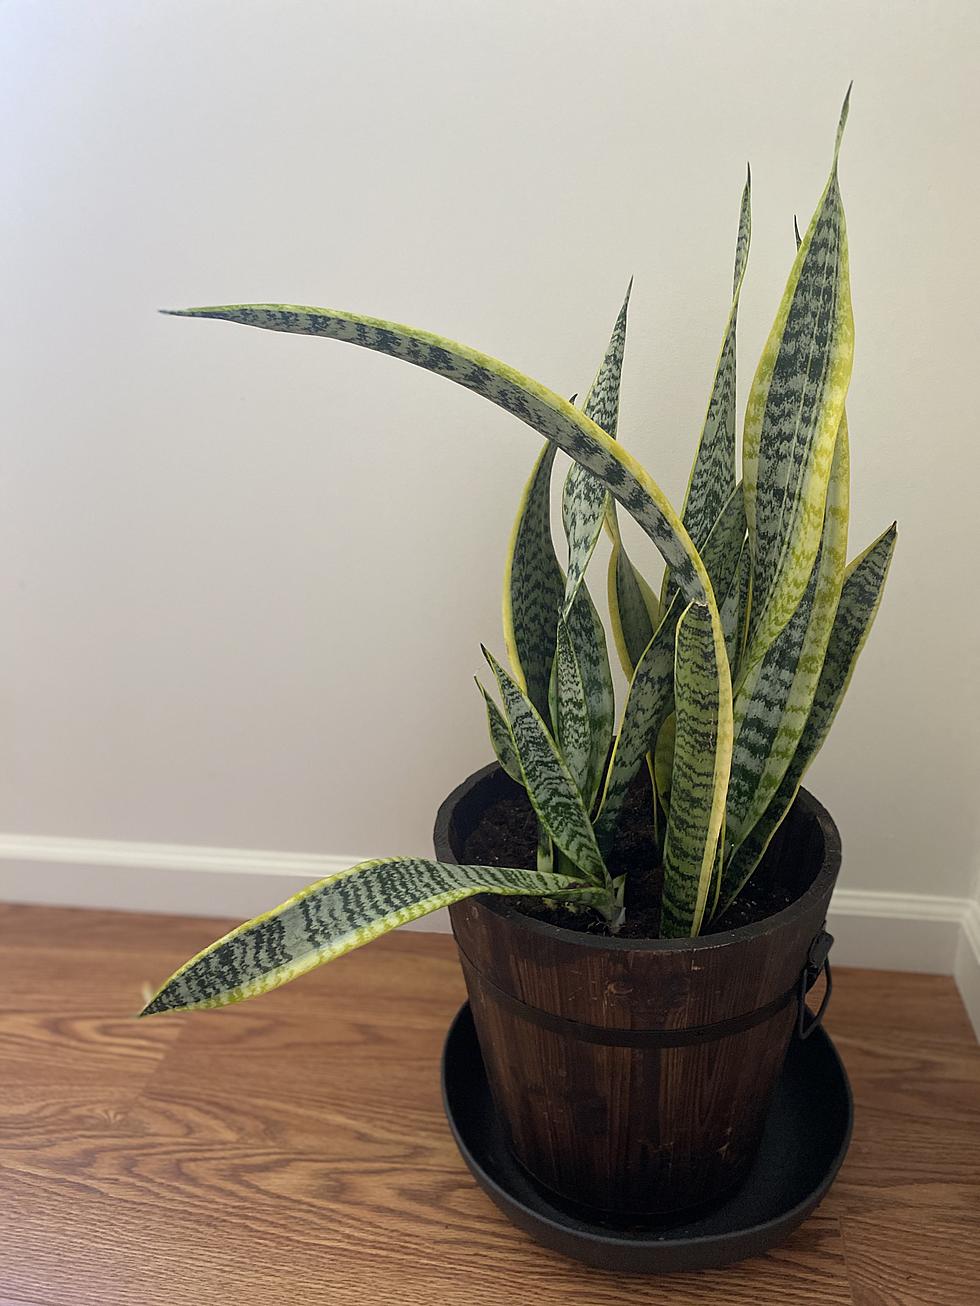 Just Call Me a Crazy Plant Lady: Meet Kari’s House Plants